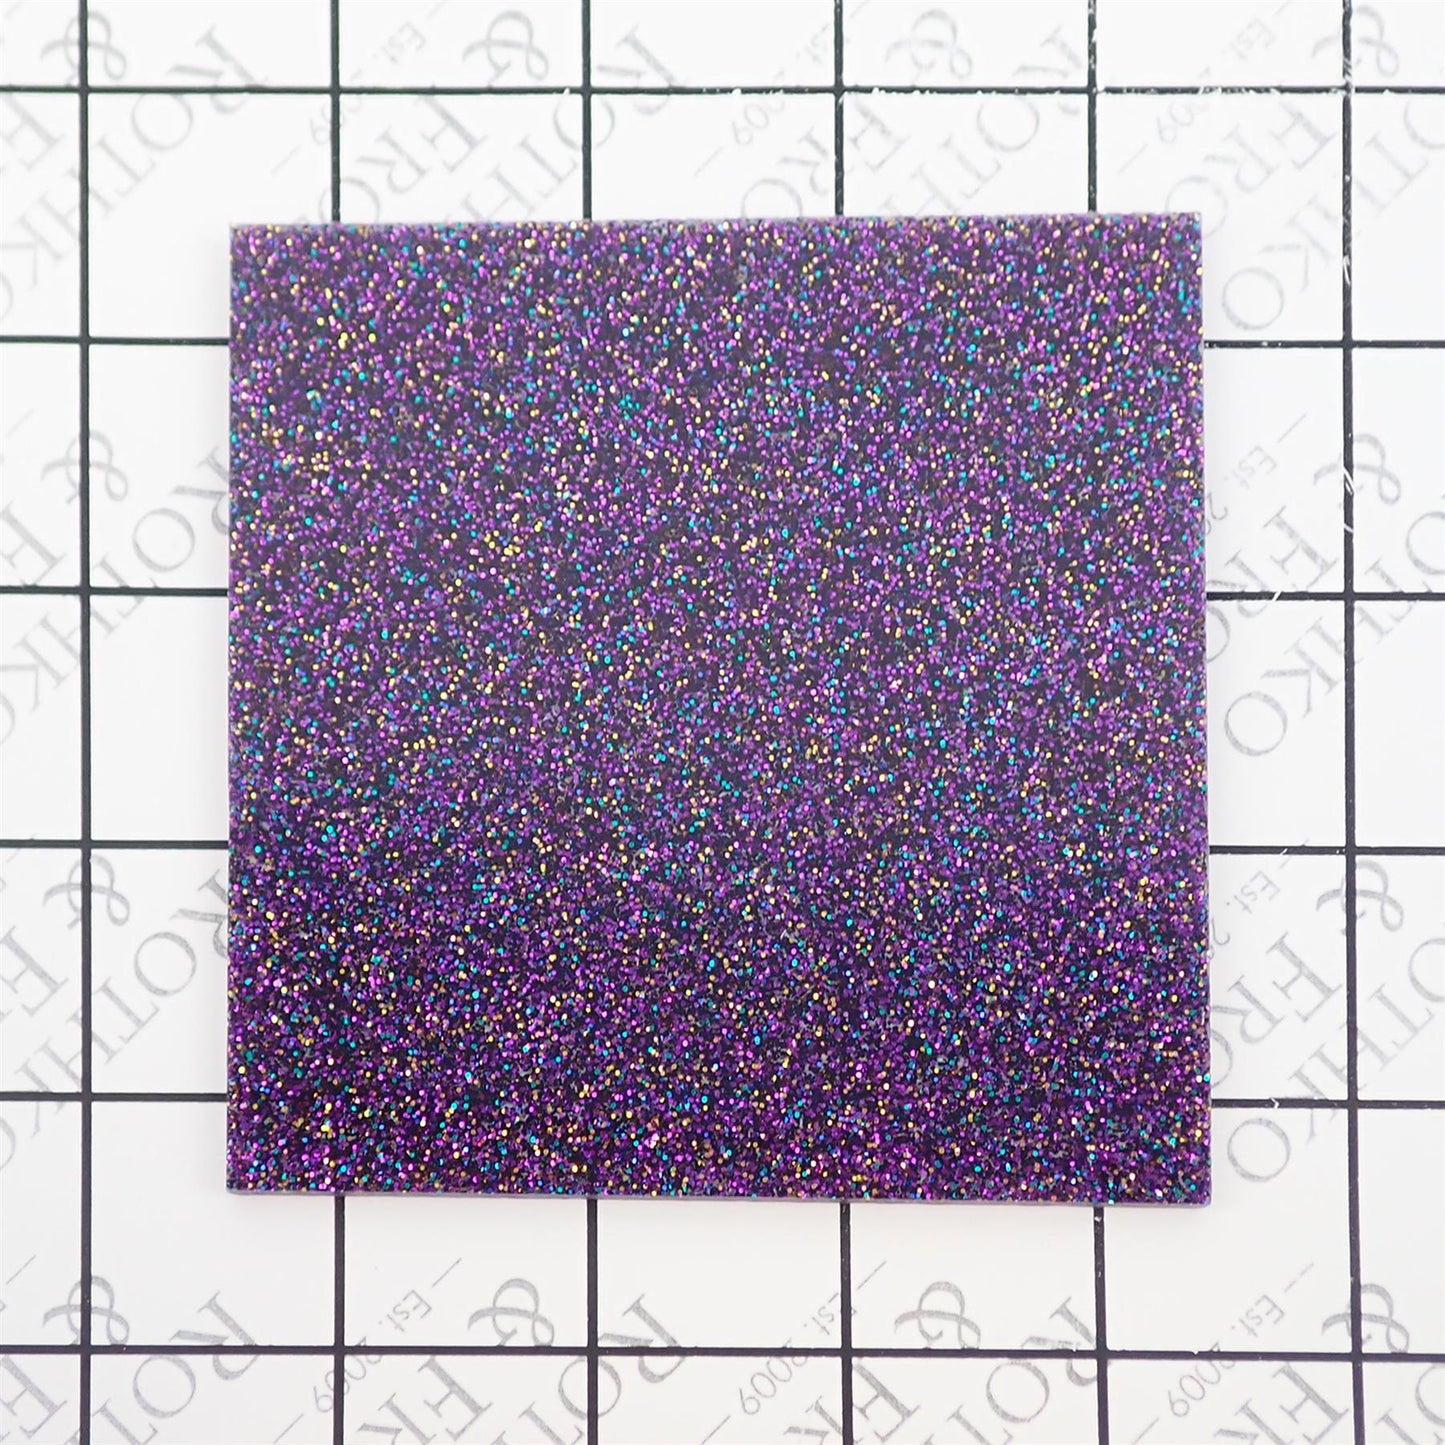 Incudo Purple 2-Sided Holographic Glitter Acrylic Sheet - 98x98x3mm (3.9x3.86x0.12"), Sample